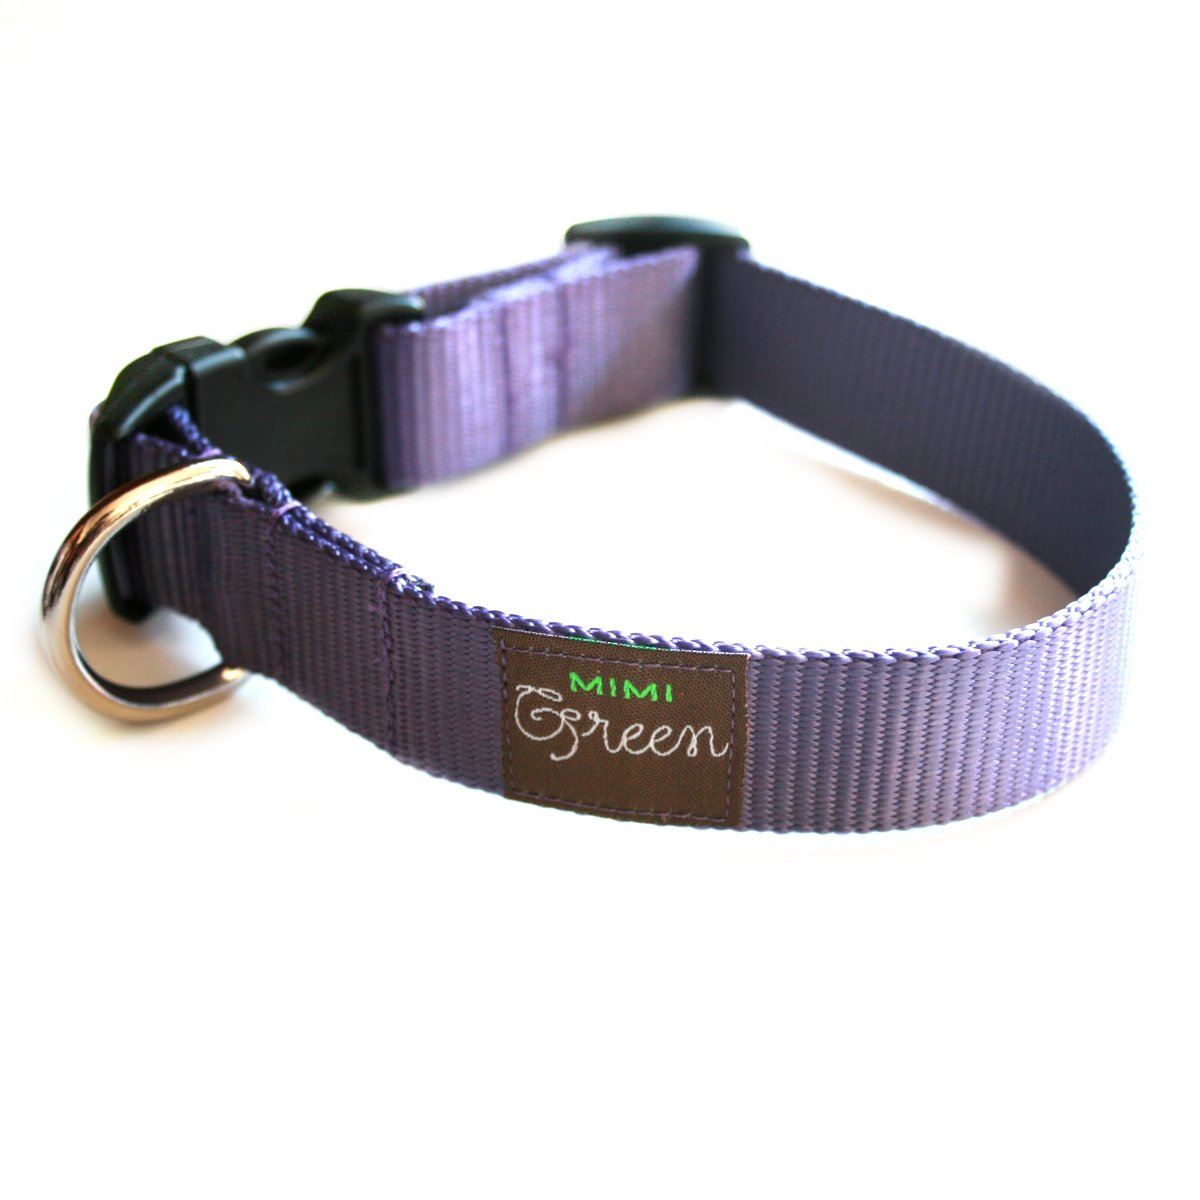 Mimi Green Classic Webbing Personalized Dog Collar Collar Mimi Green Grape 